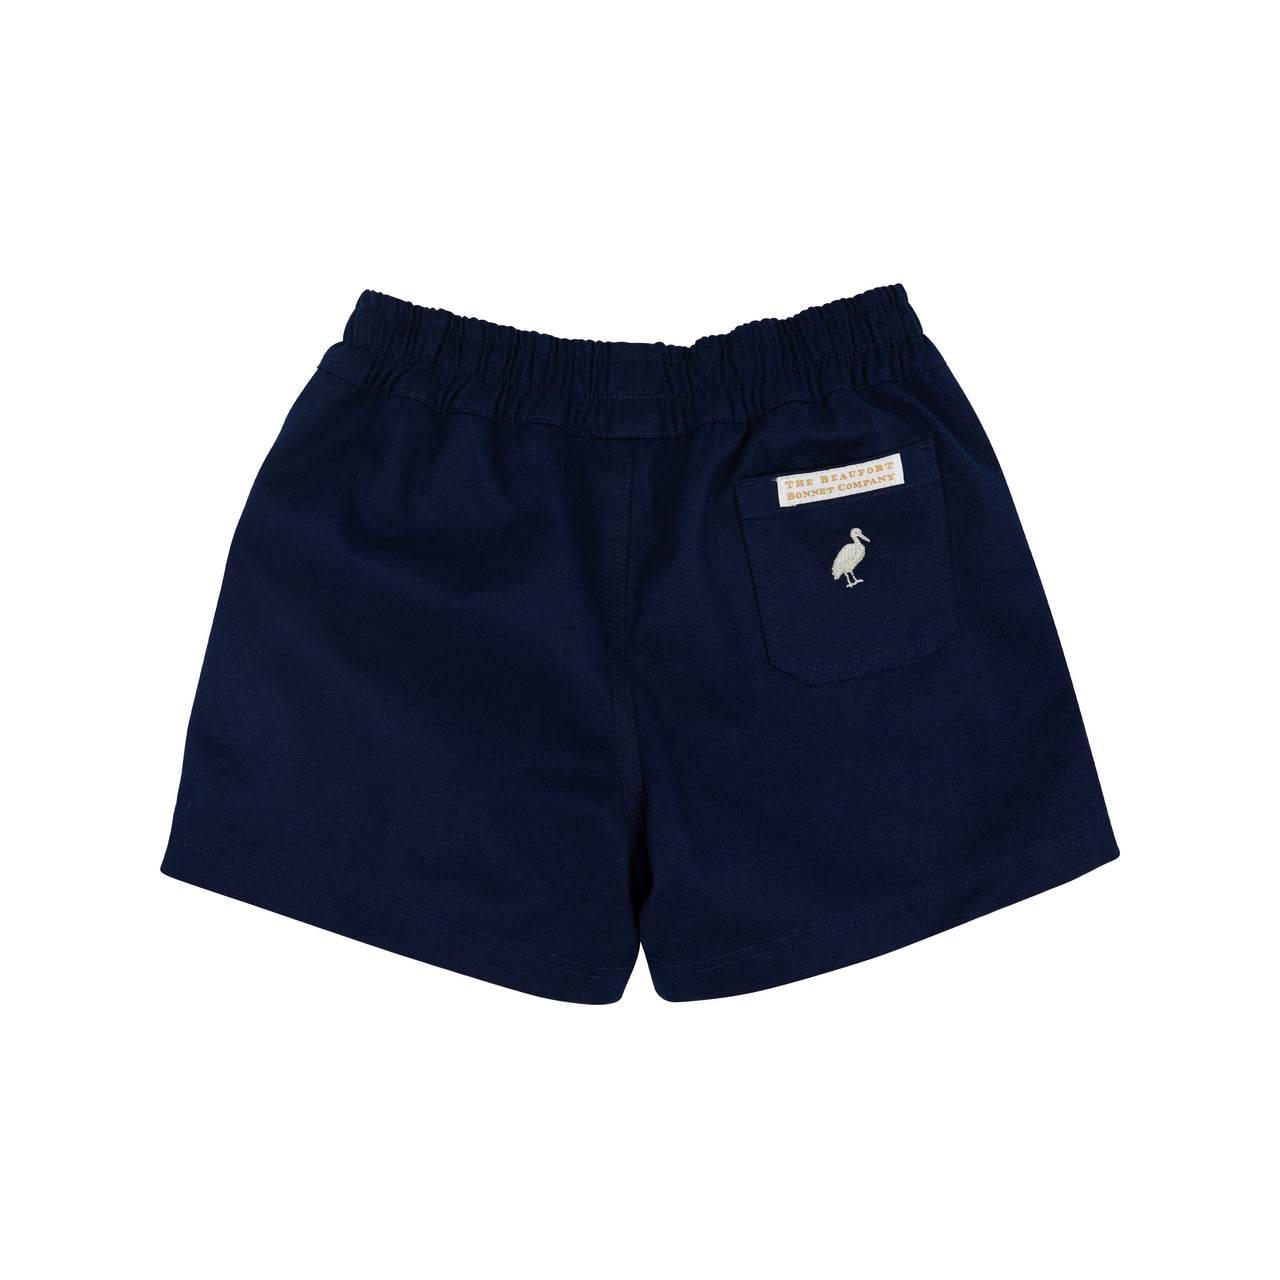 Sheffield Shorts |  Nantucket Navy with Keeneland Khaki Stork